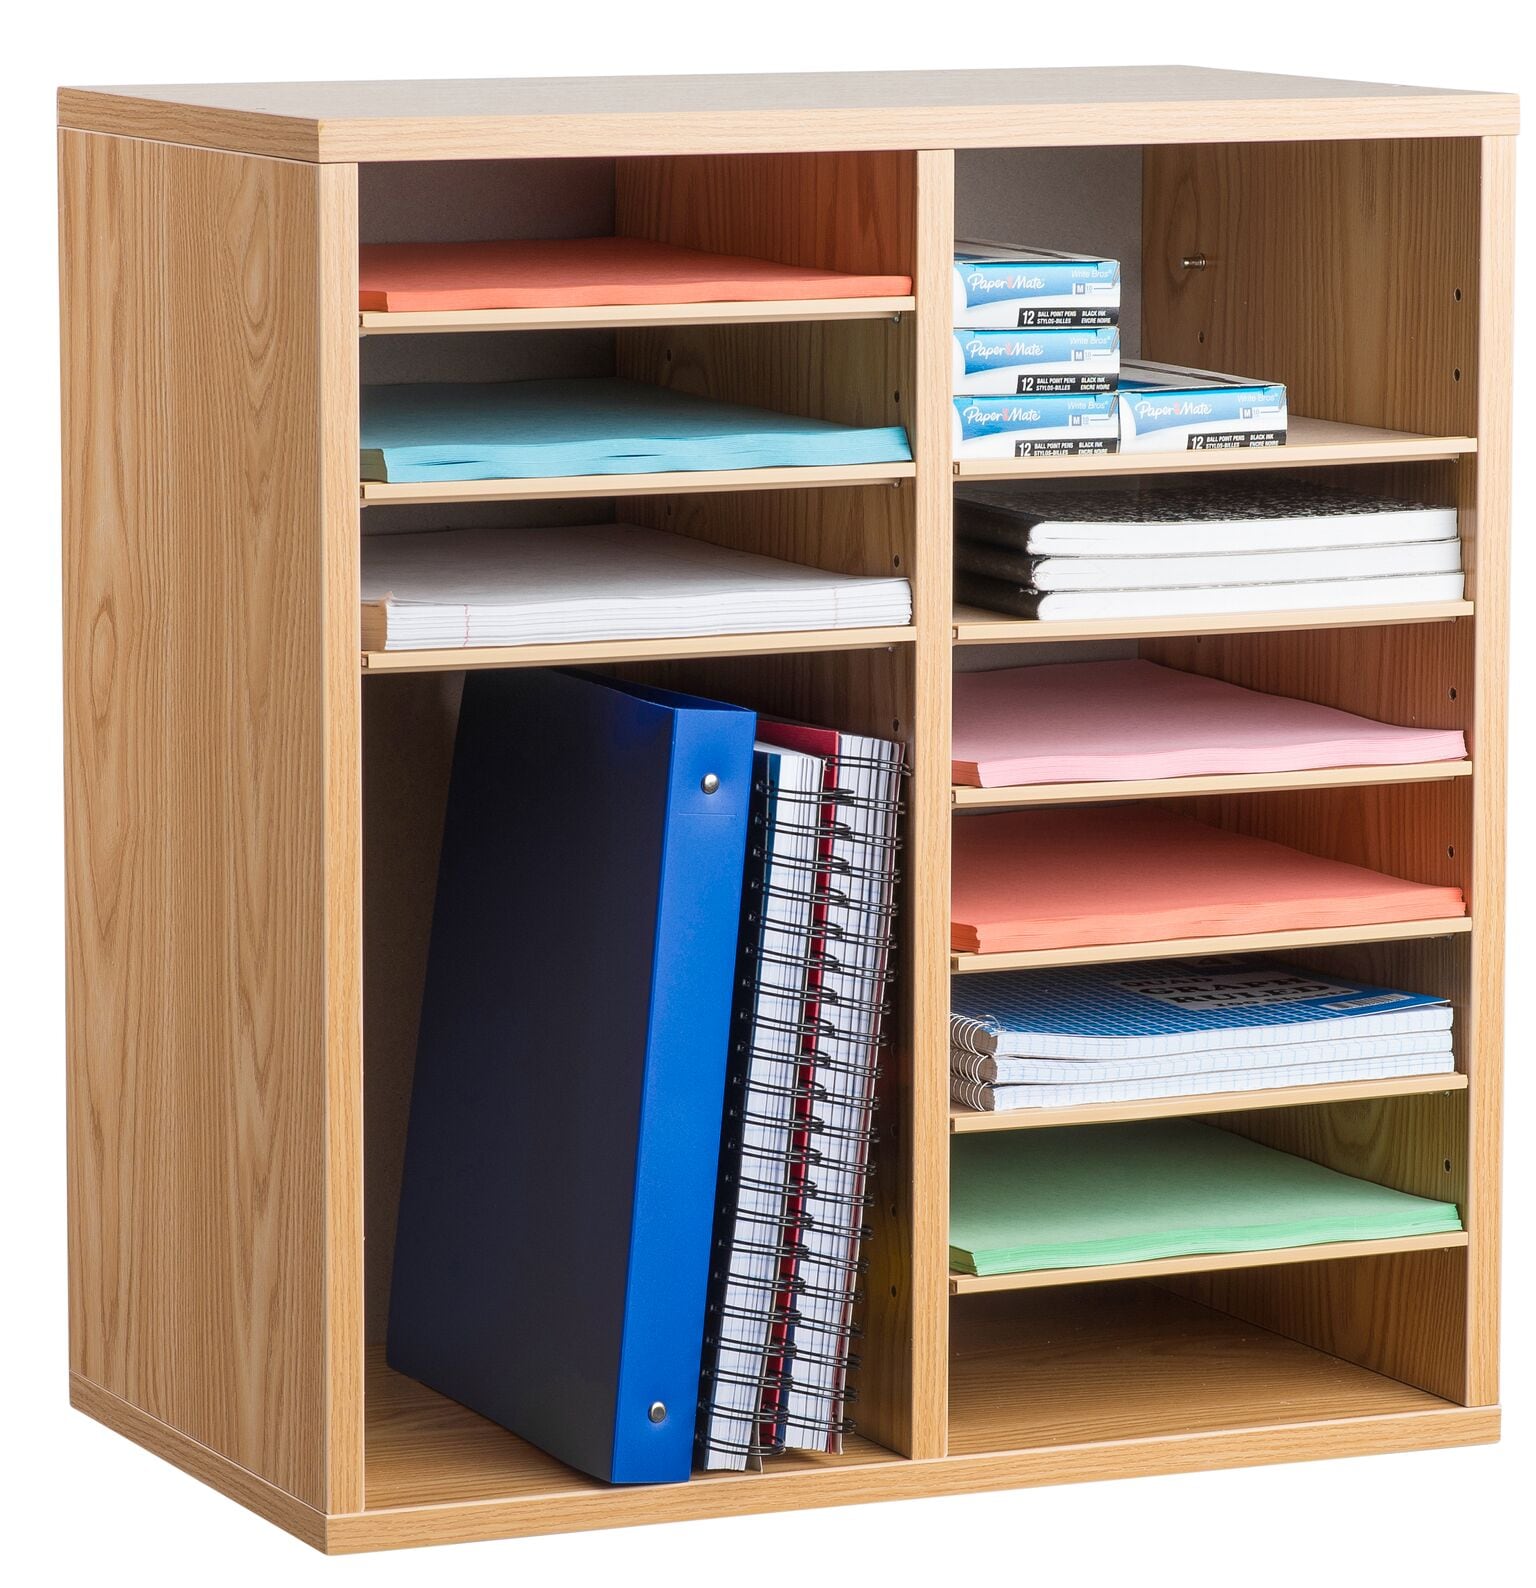 AdirOffice Medium Oak 16 Compartment Adjustable Wood Literature Organizer 